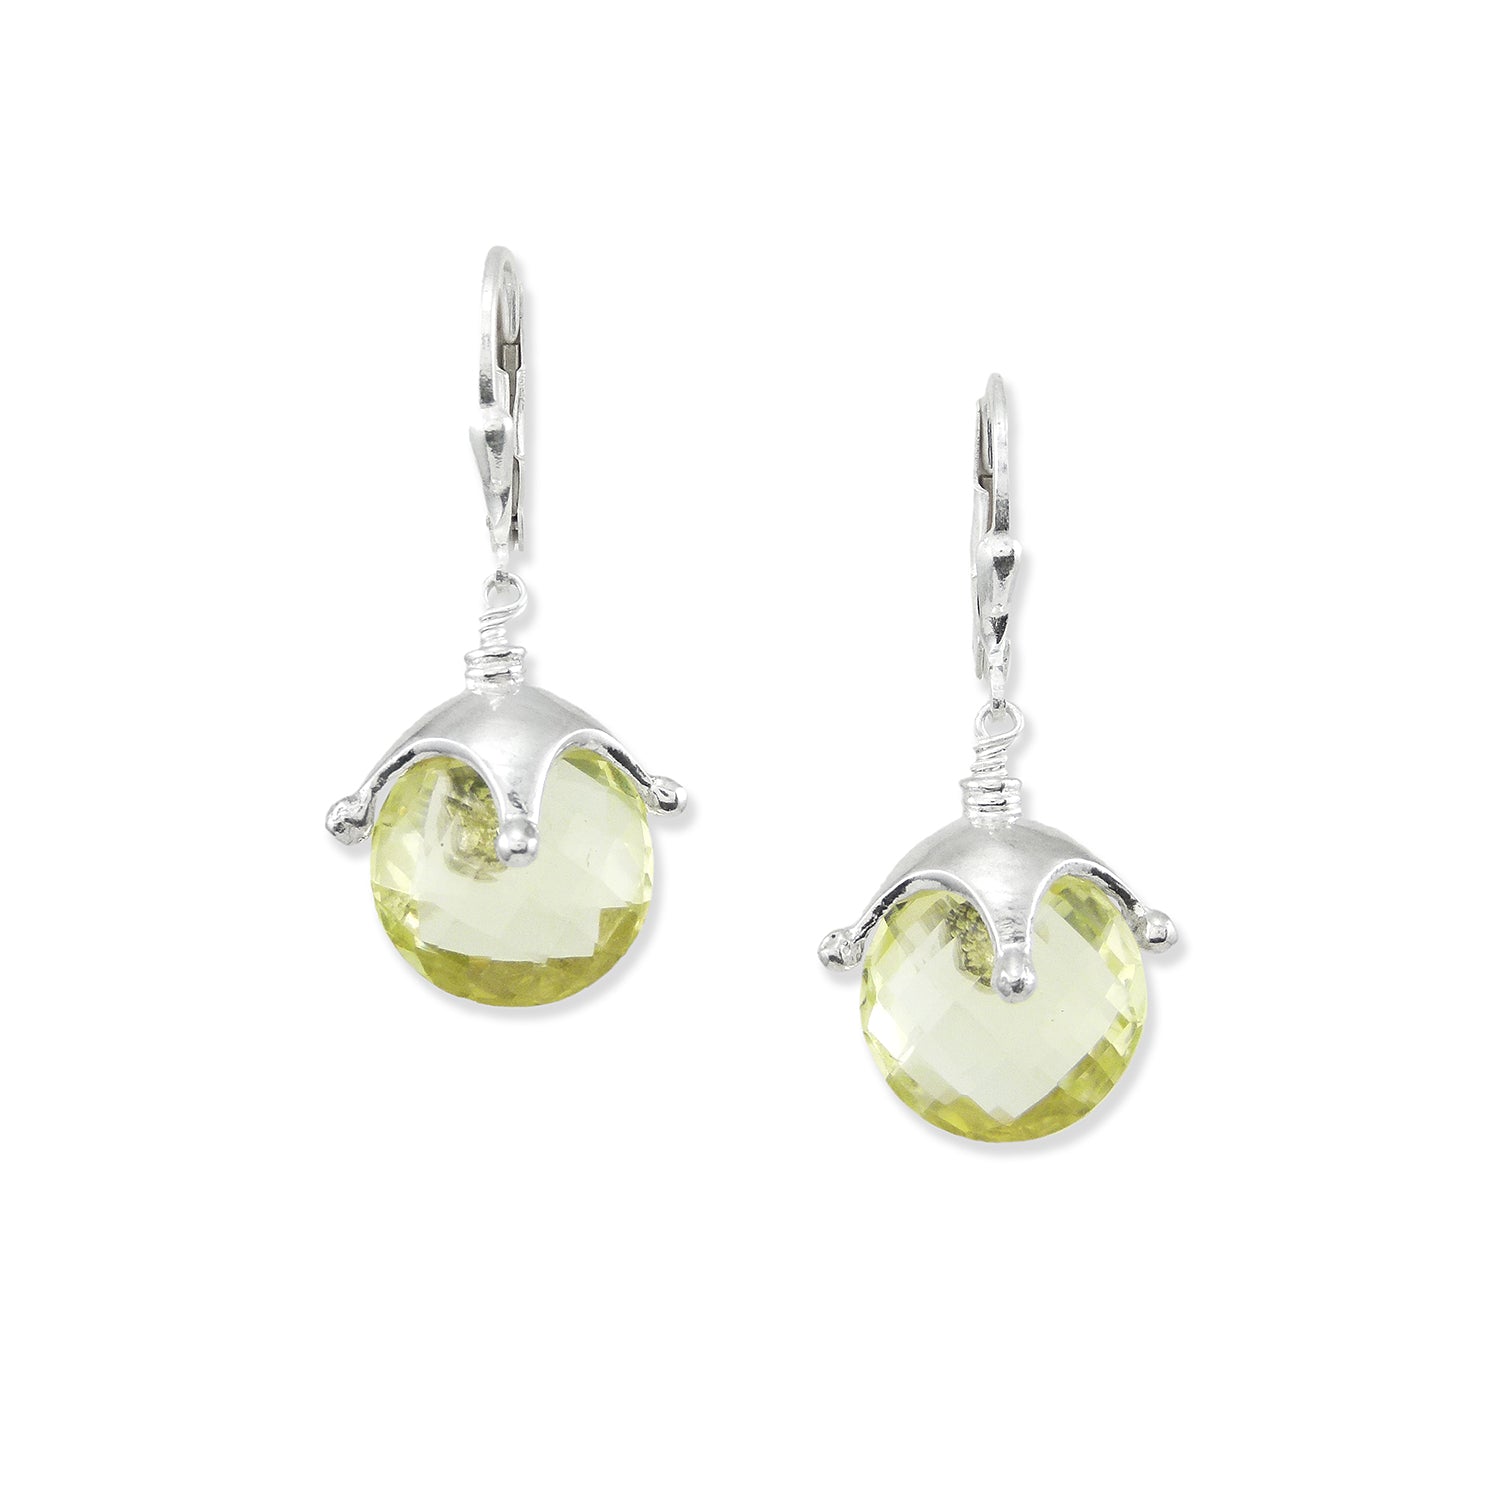 Jester Cap Earrings - Silver, Lemon Quartz